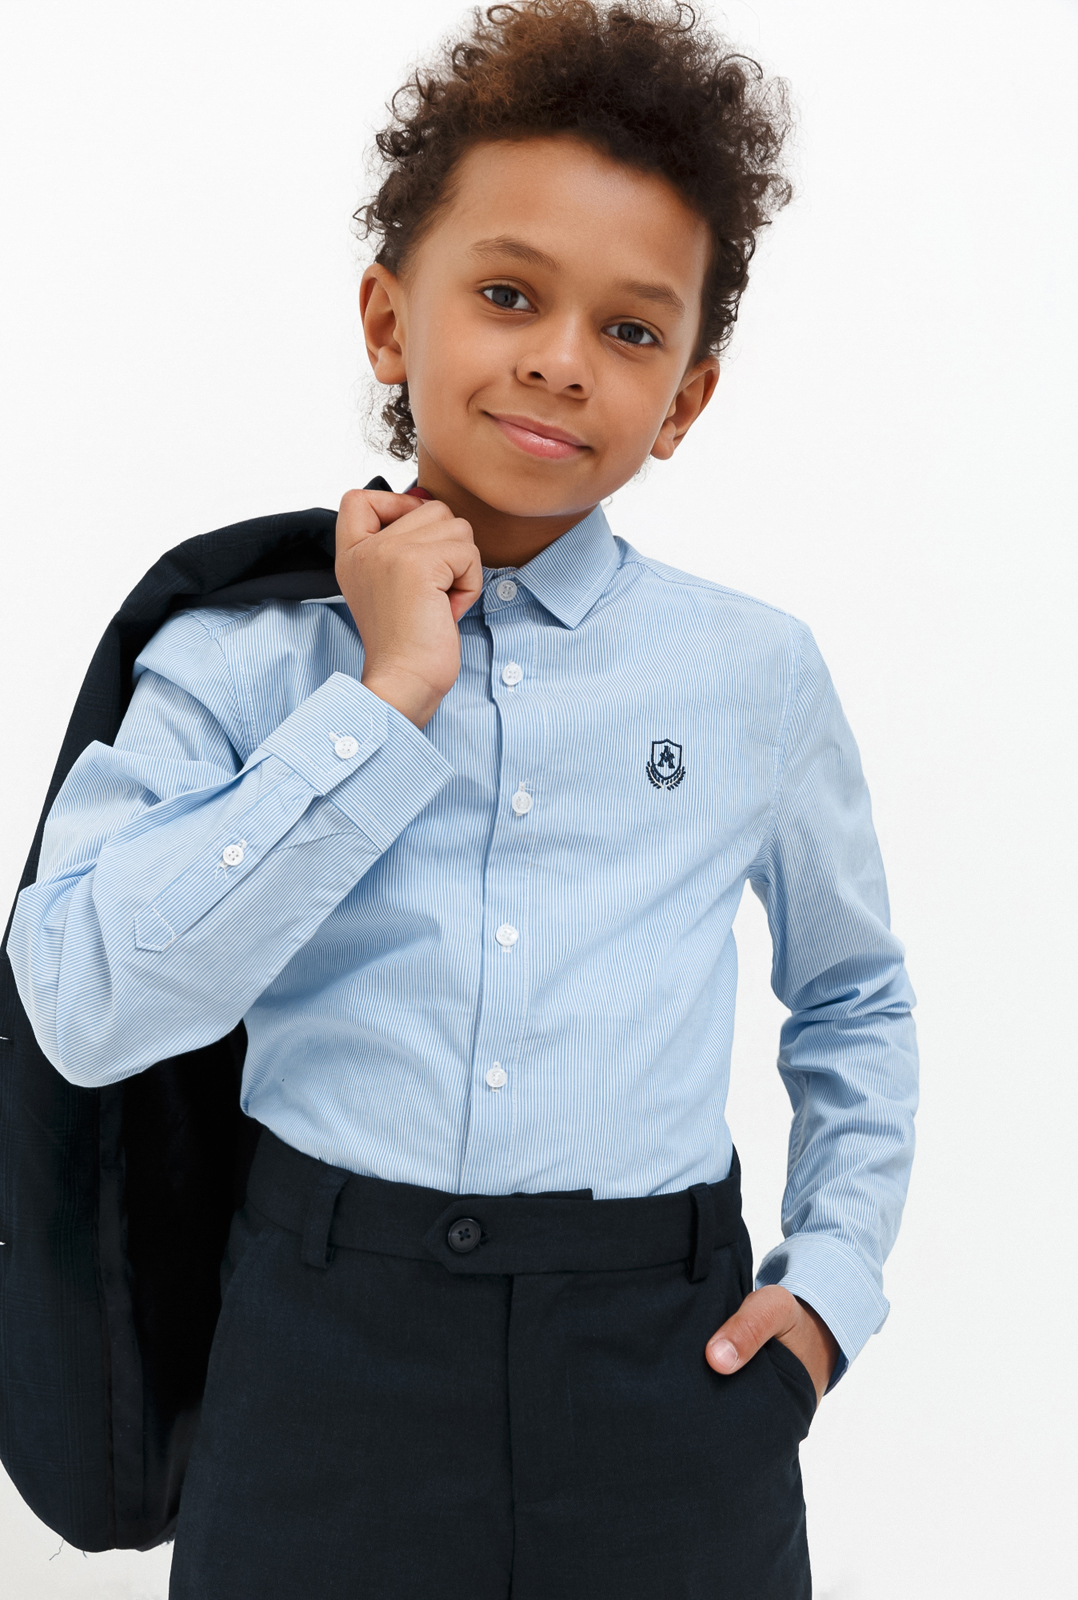 Рубашка для мальчика Acoola Lowell, цвет: синий. 20140280036_500. Размер 164